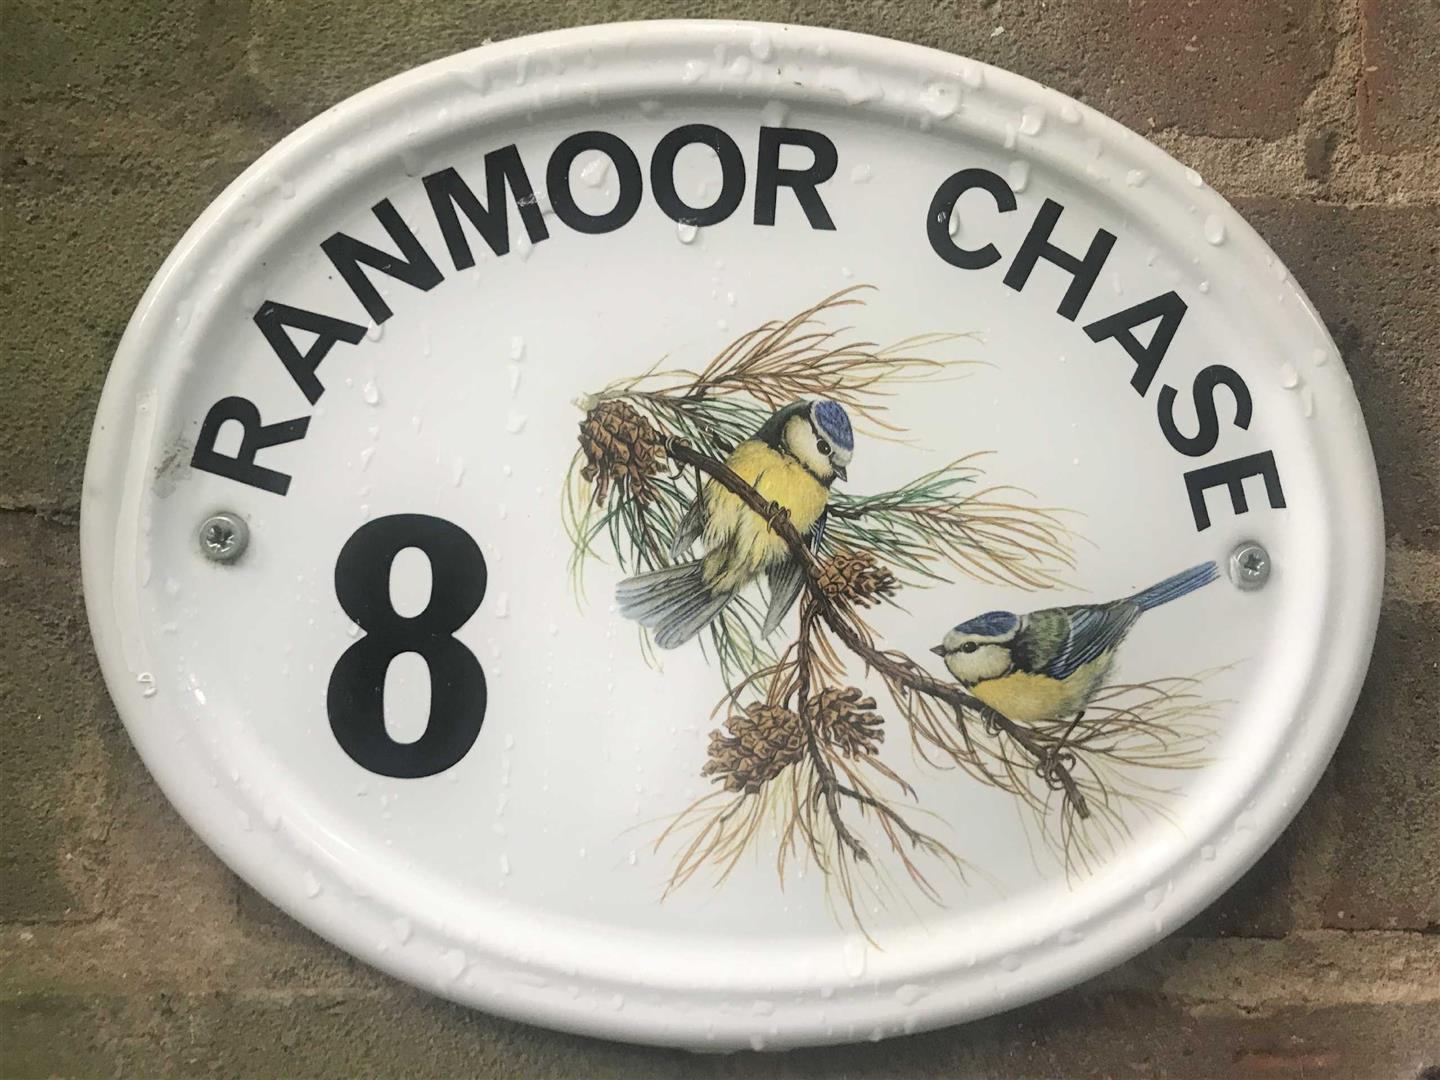 Ranmoor Chase